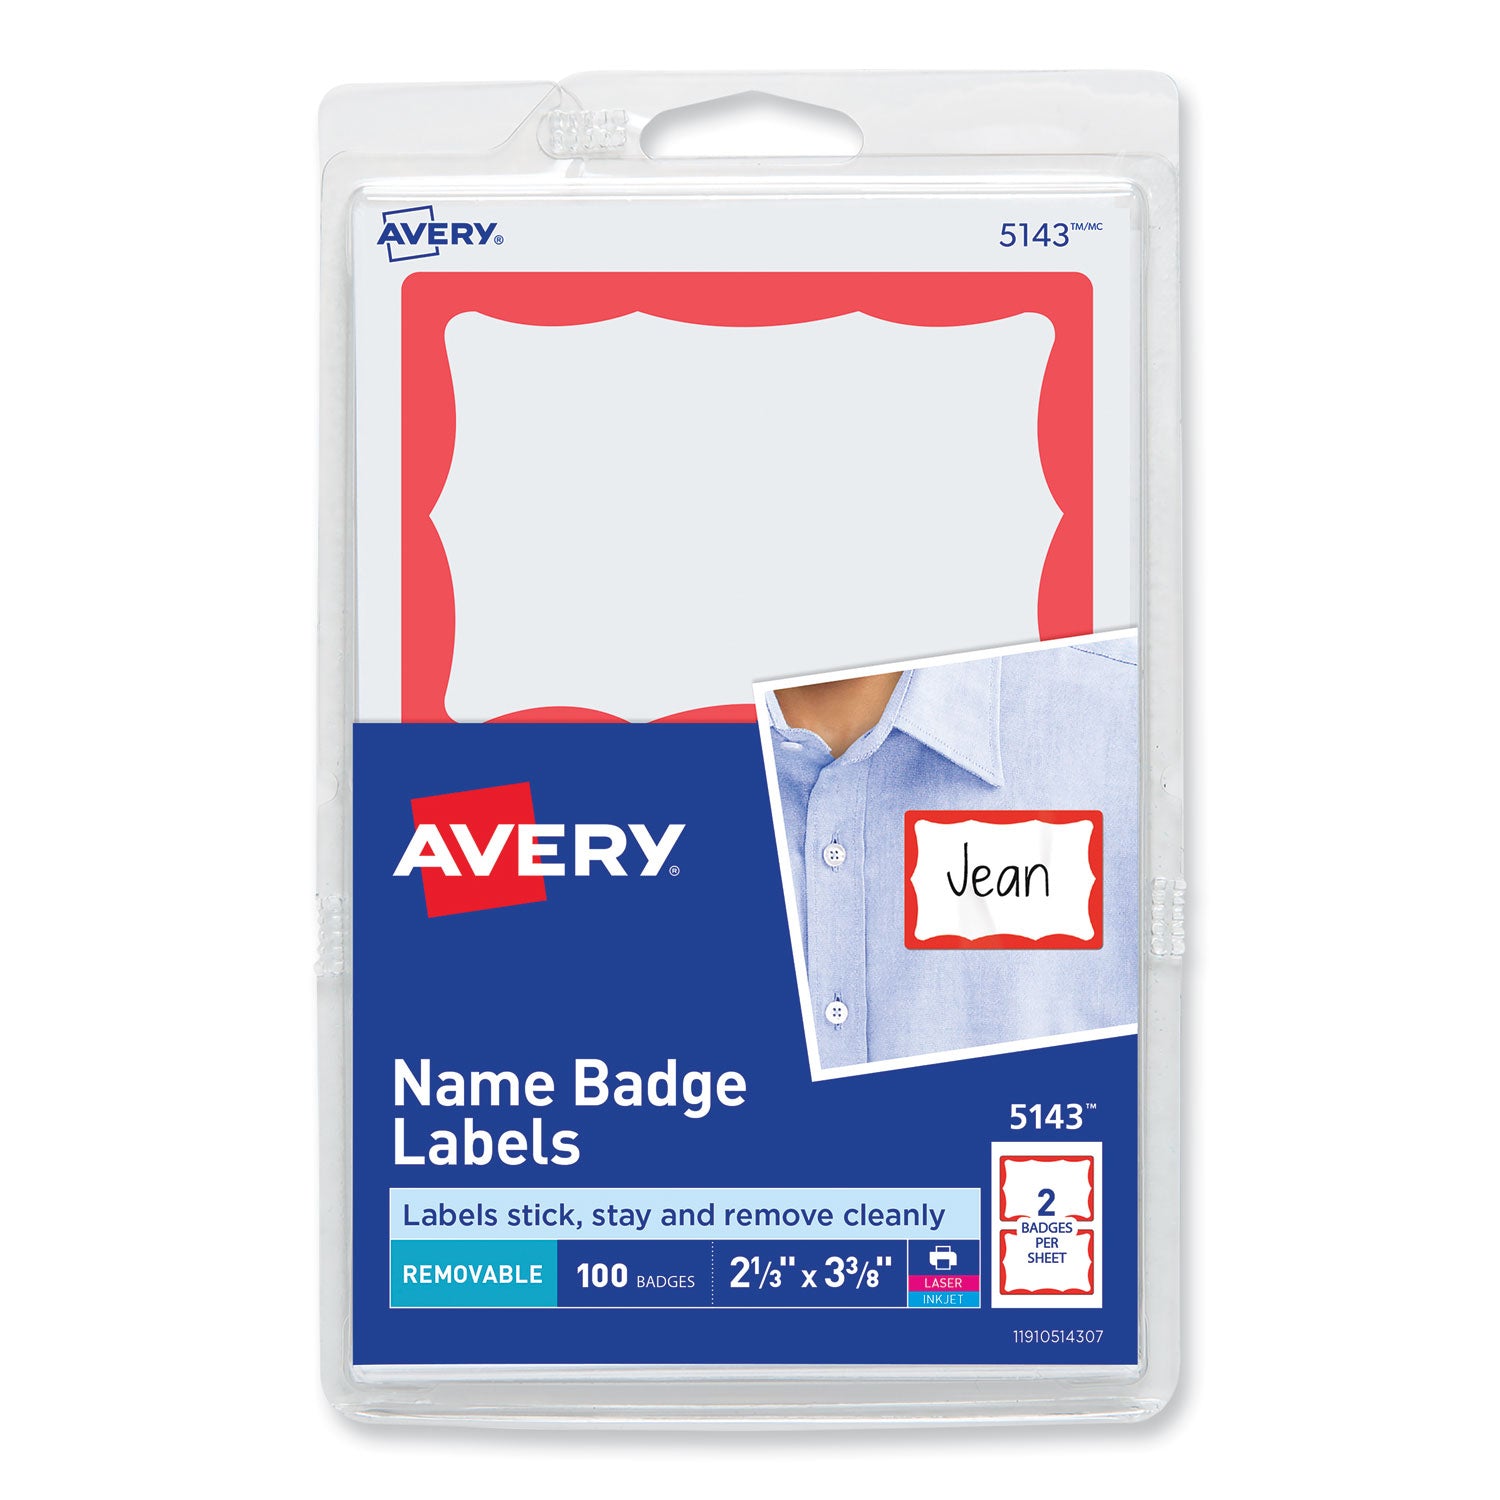 Printable Adhesive Name Badges, 3.38 x 2.33, Red Border, 100/Pack - 